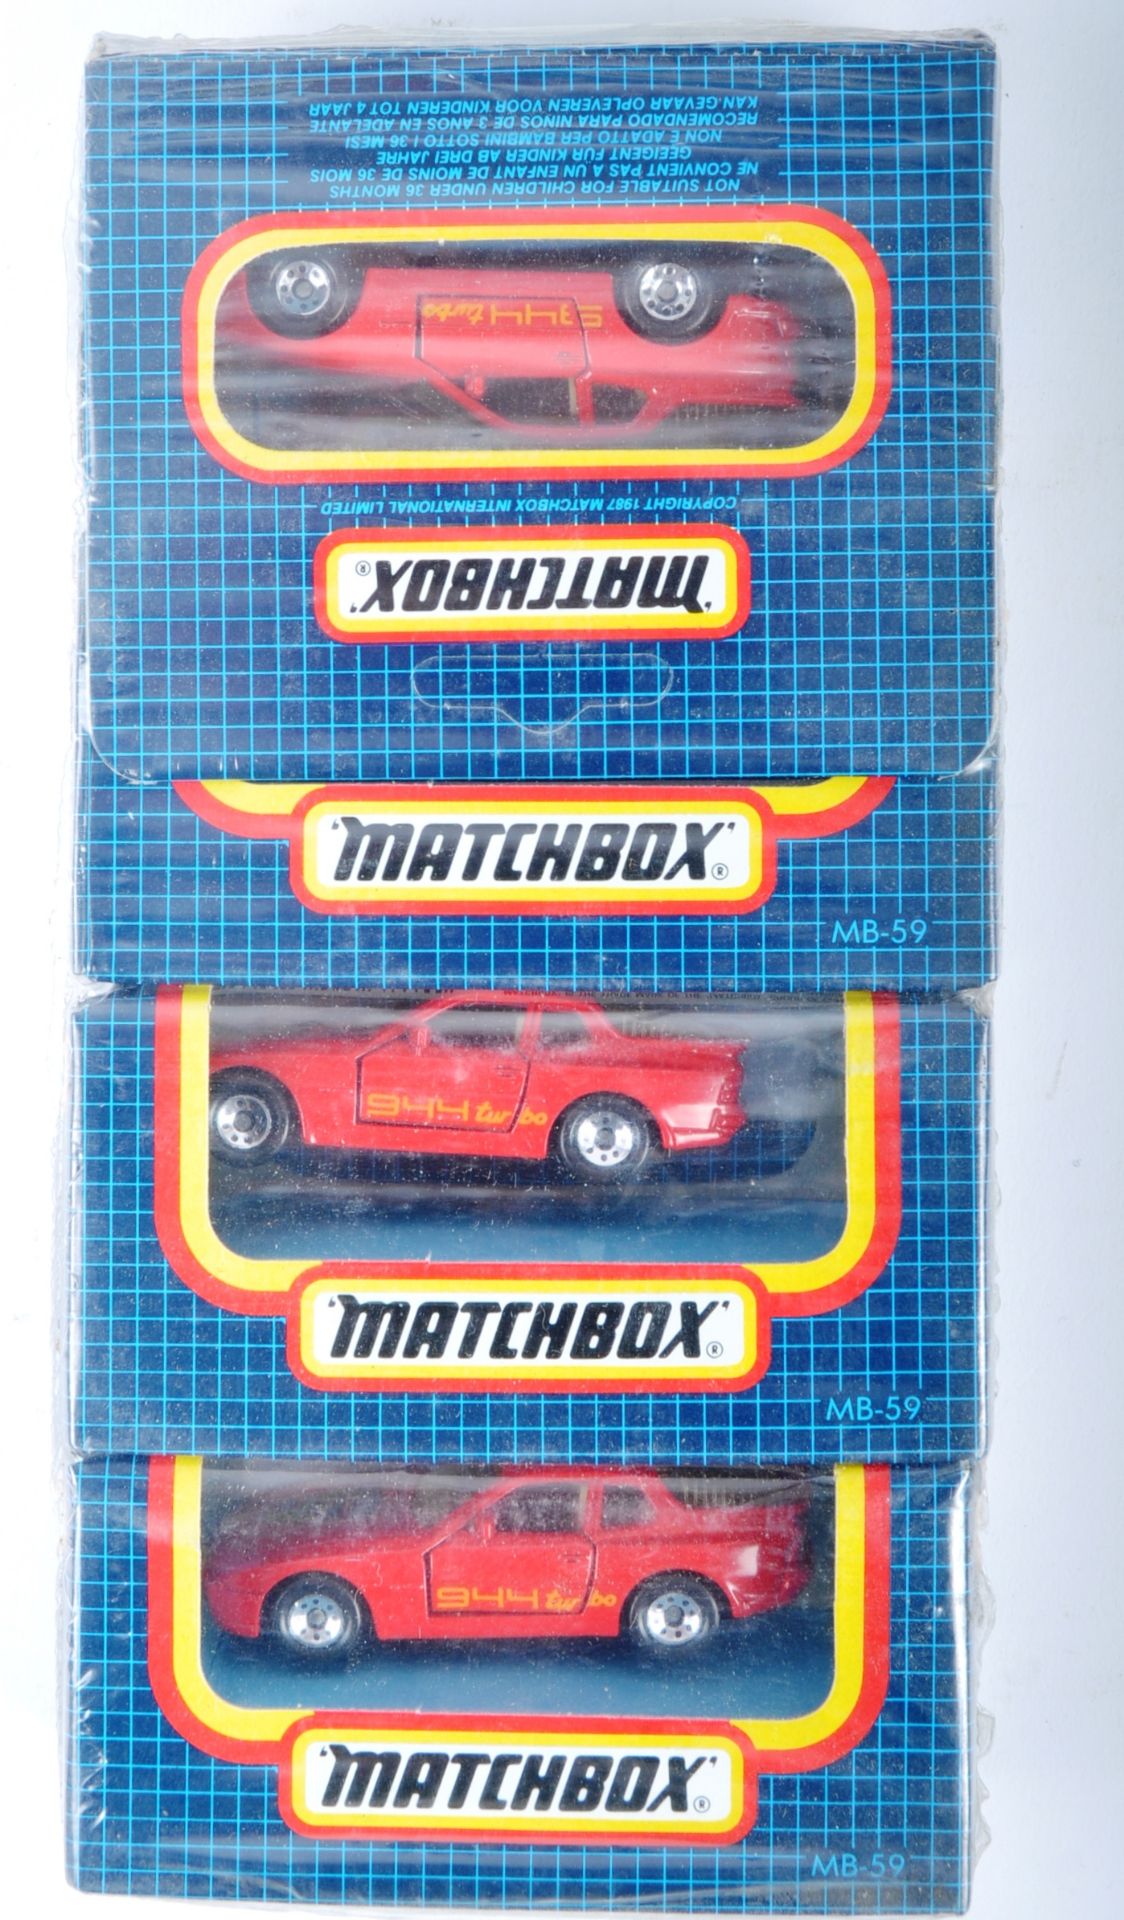 MATCHBOX 1-75 SERIES TRADE BOX DIECAST MODEL CARS - Image 4 of 4